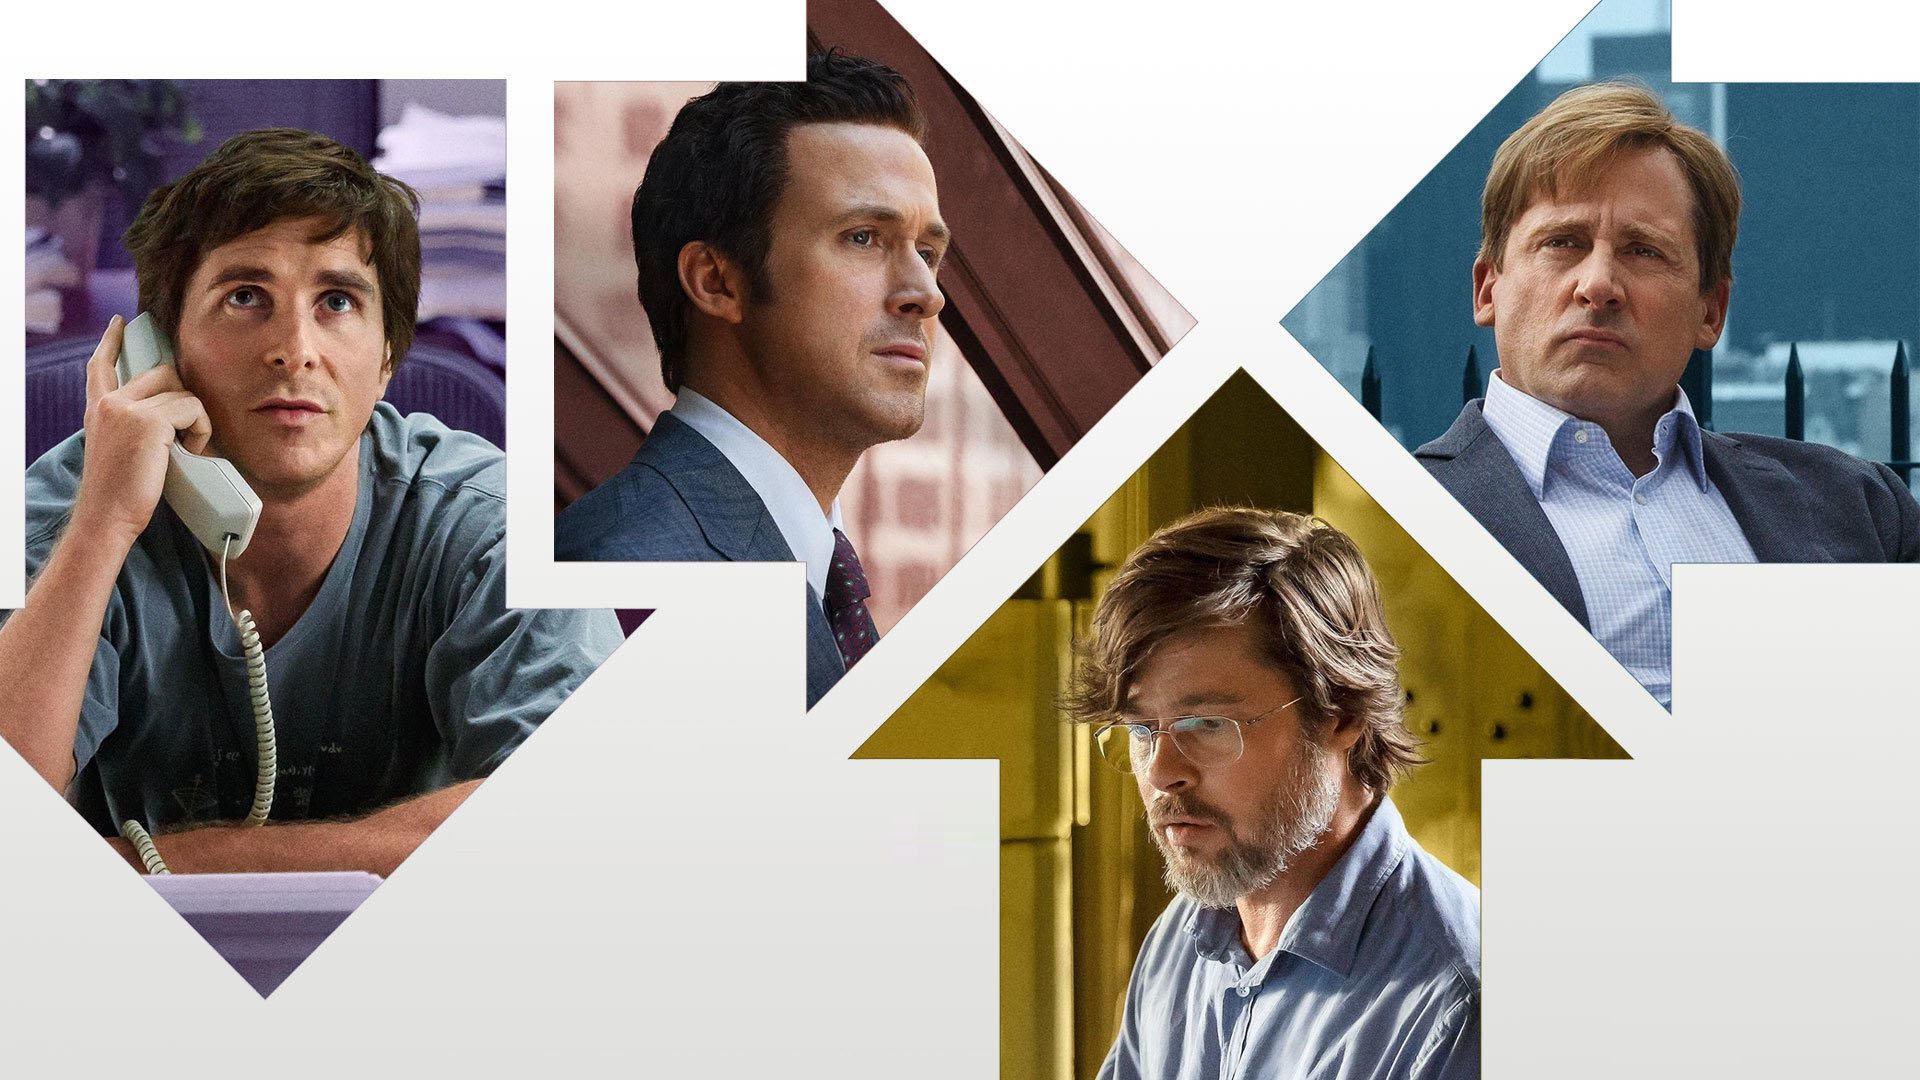 Christian Bale: The Big Short, Michael Burry, 2015. 1920x1080 Full HD Wallpaper.